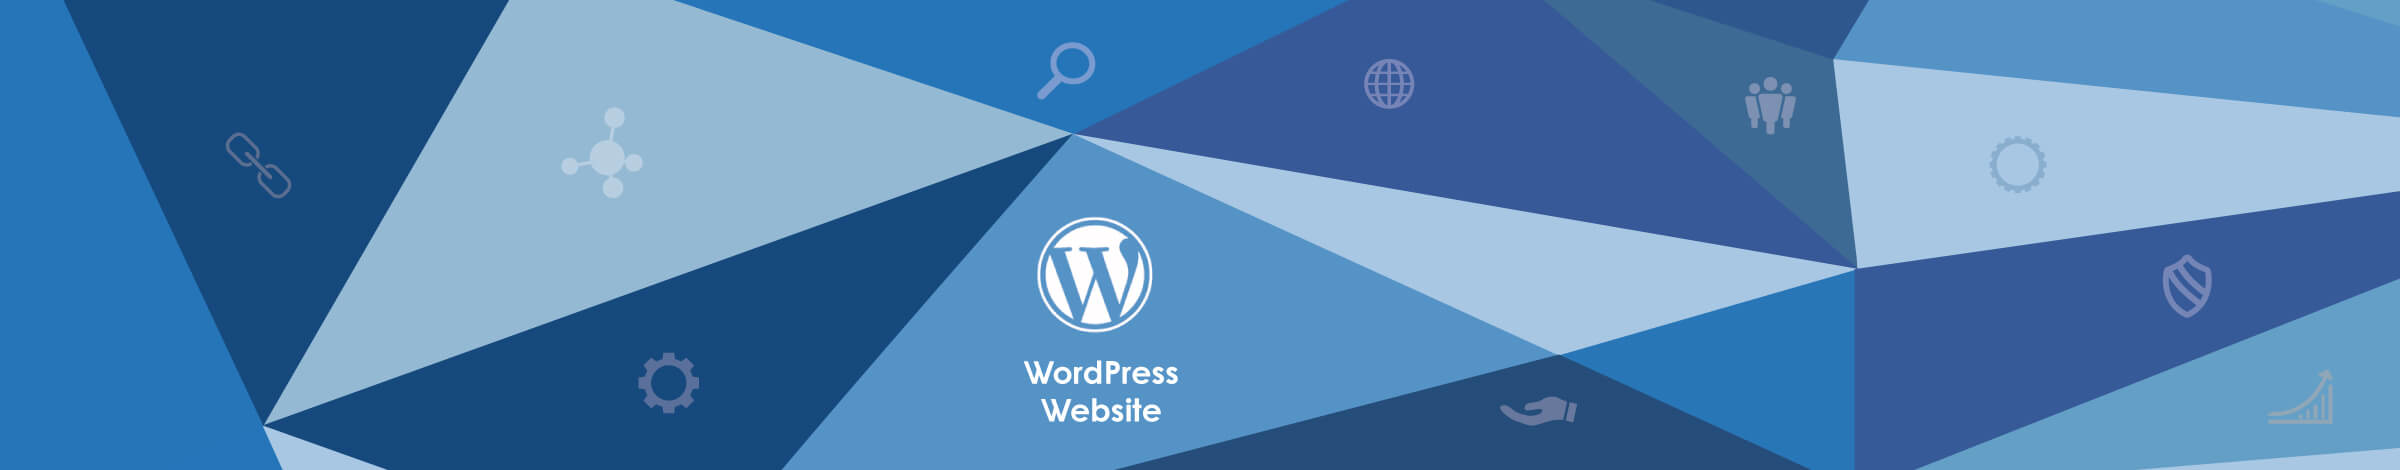 web updates kmu GmbH-wuk-WordPress und SEO Agentur -  WordPress-Website